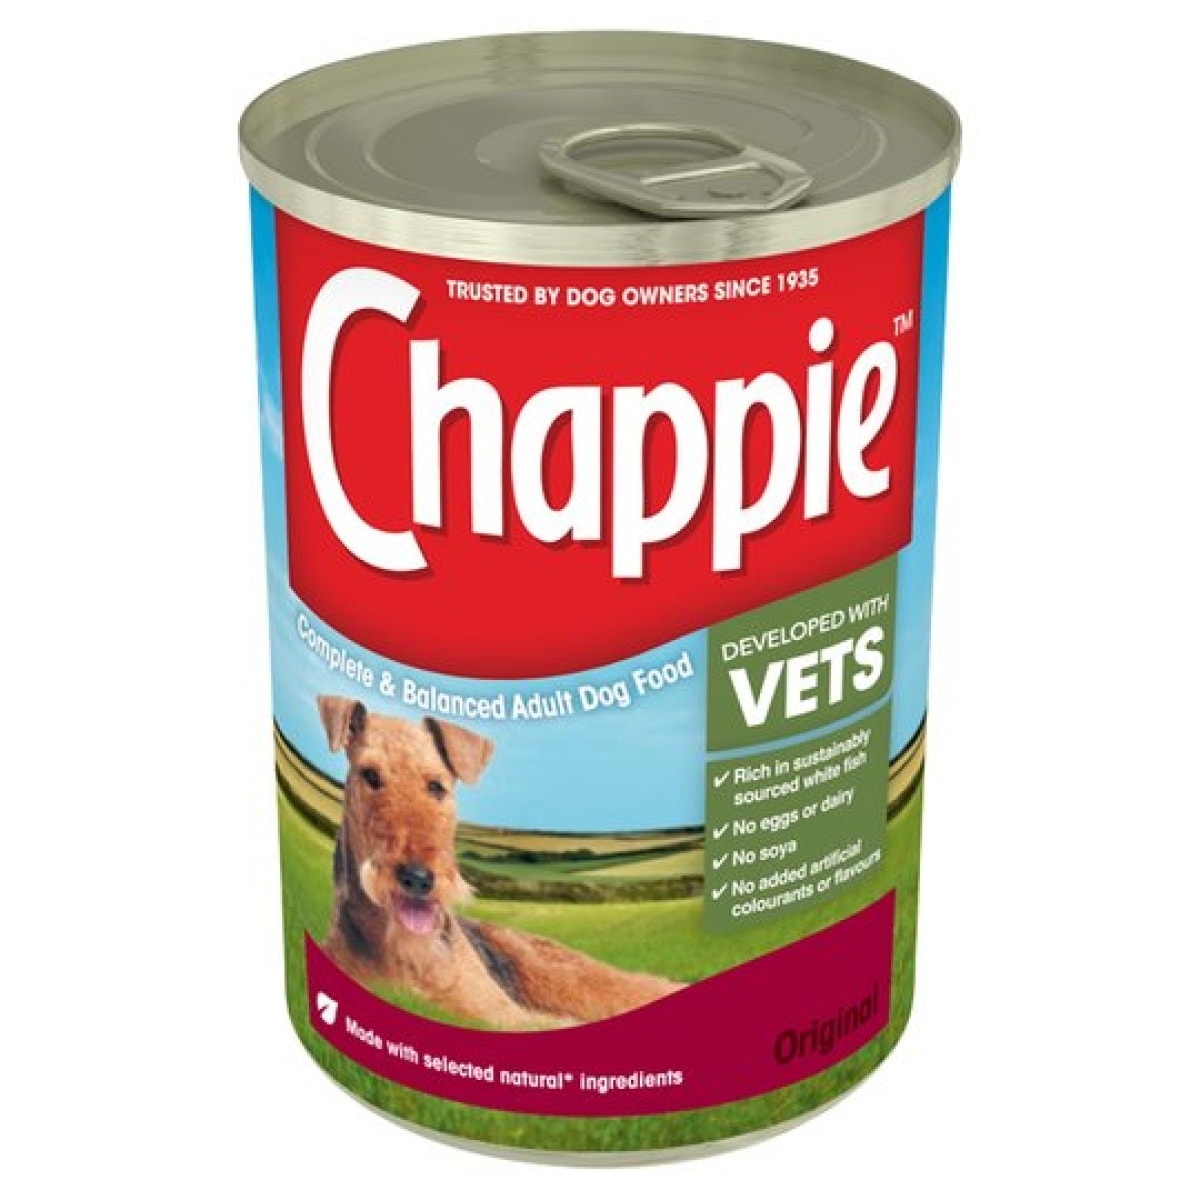 Chappie Tin 12 x 412g Main Image